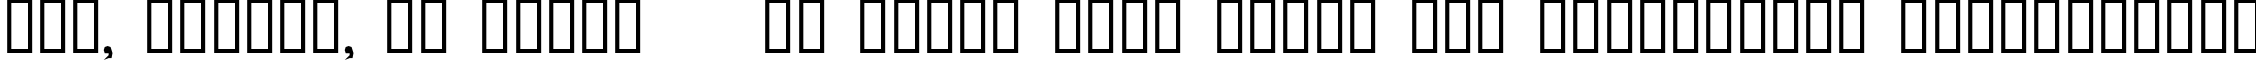 Пример написания шрифтом Future Sallow текста на украинском